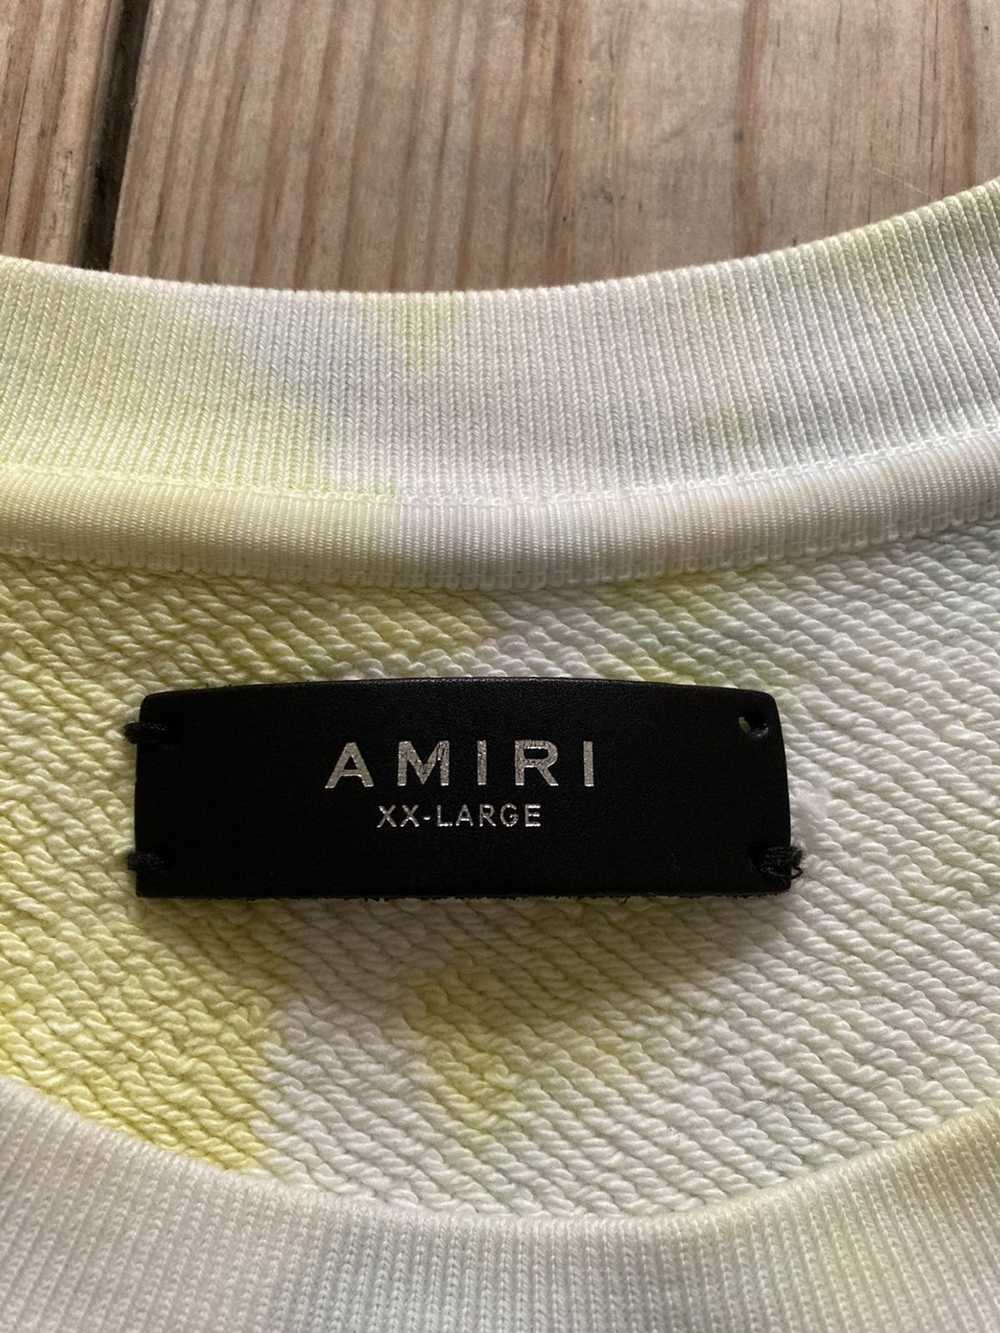 Amiri Amiri tie dye sweatshirt - image 3